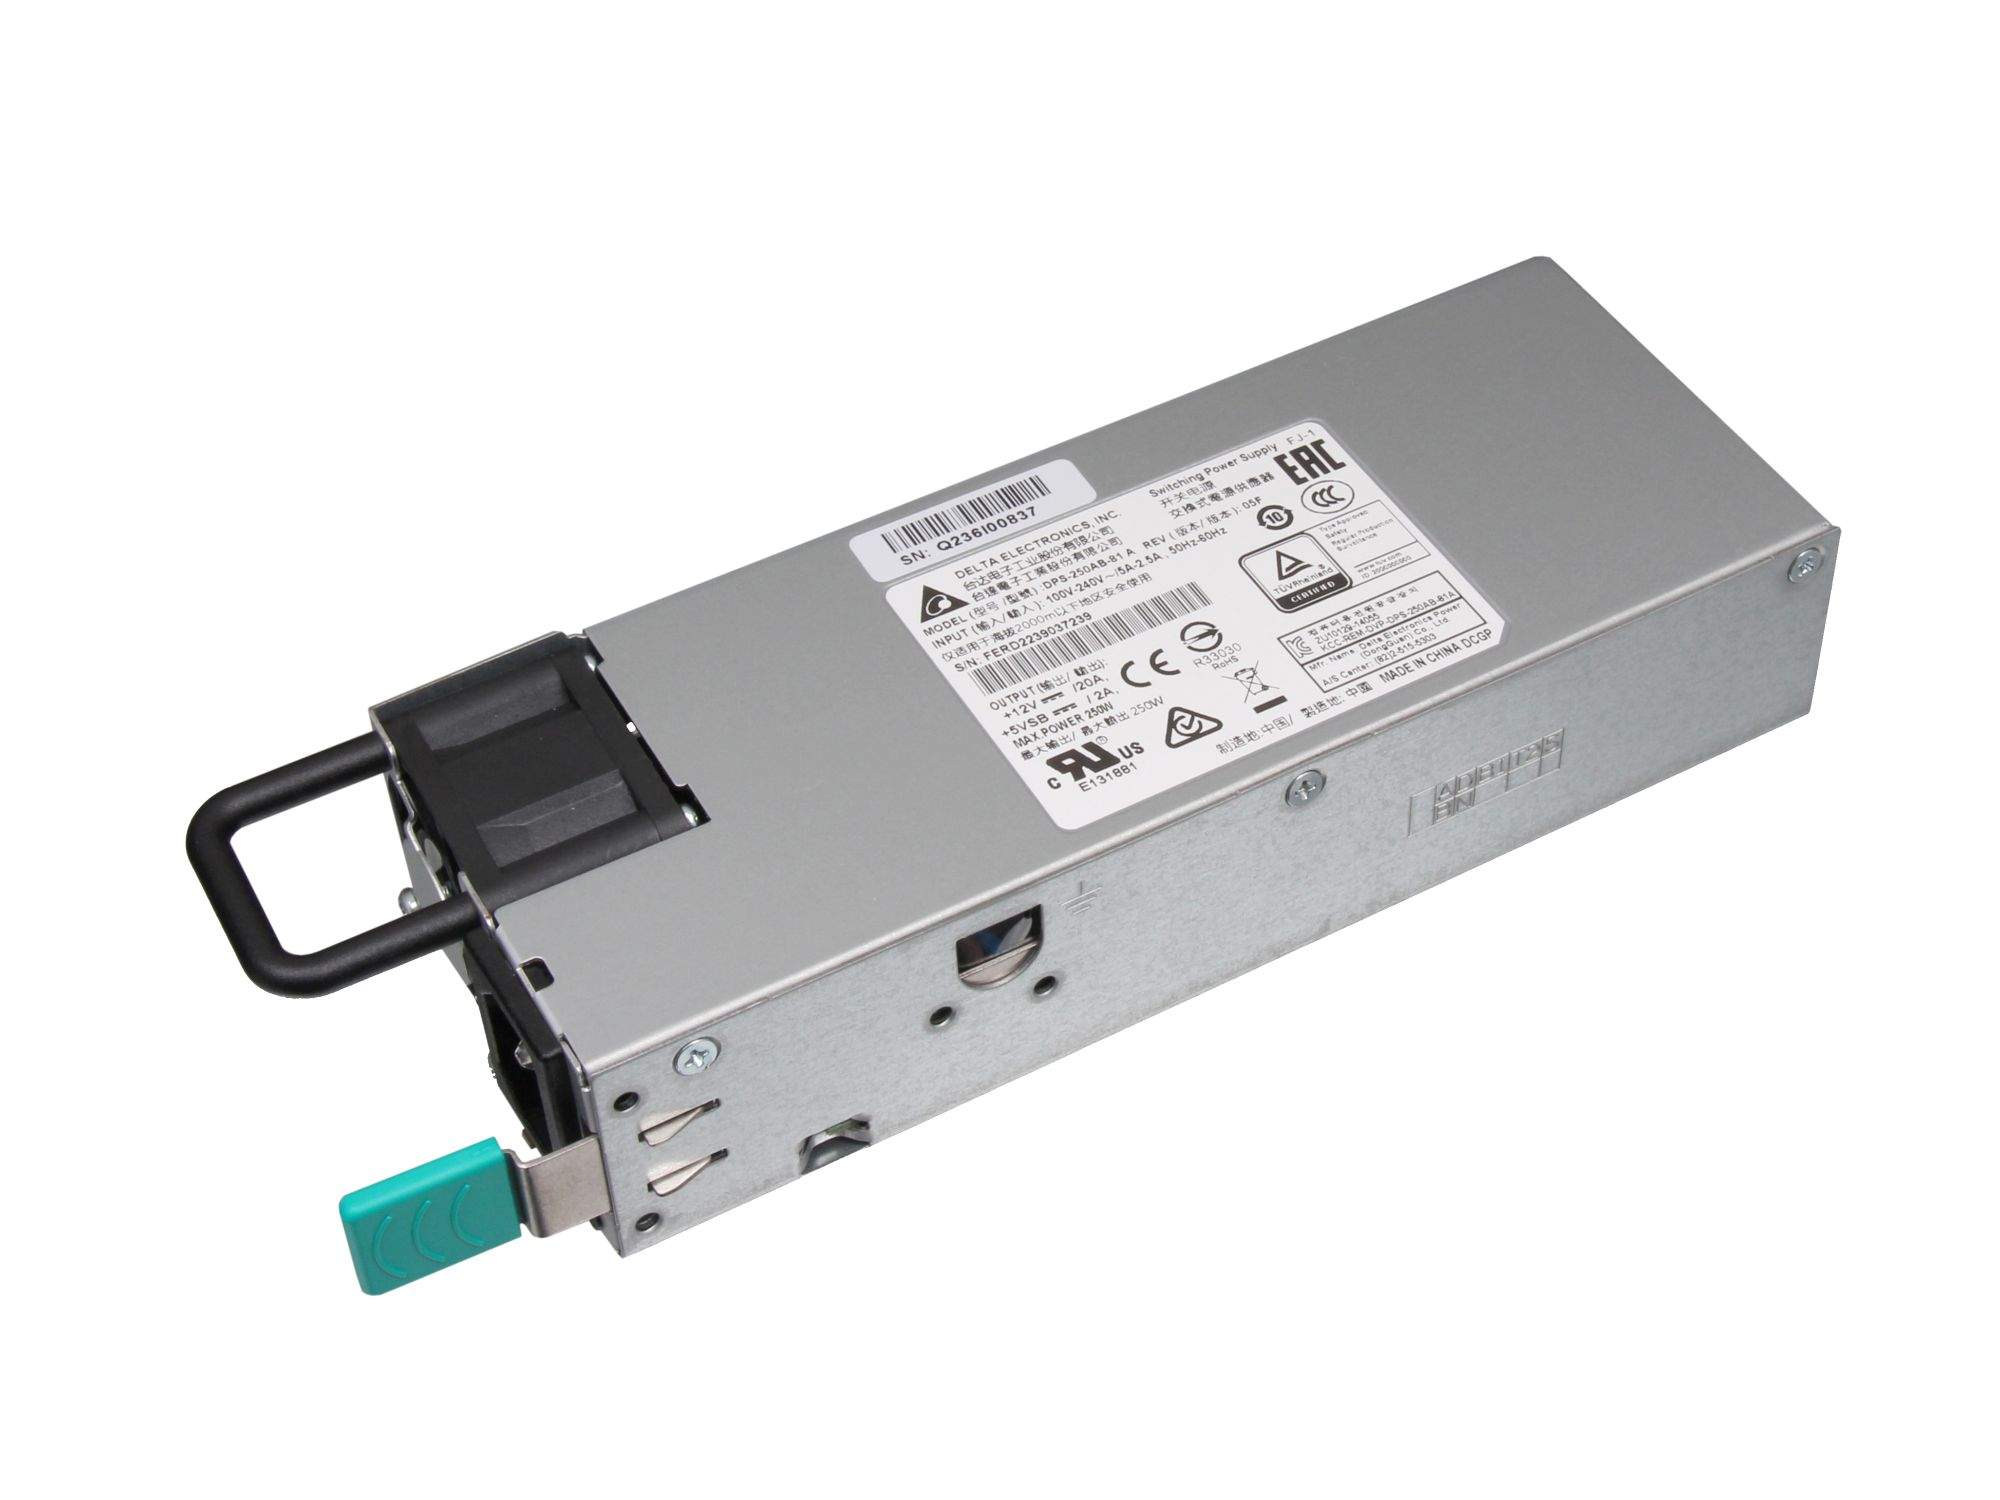 QNAP SP-469U-S-PSU power supply